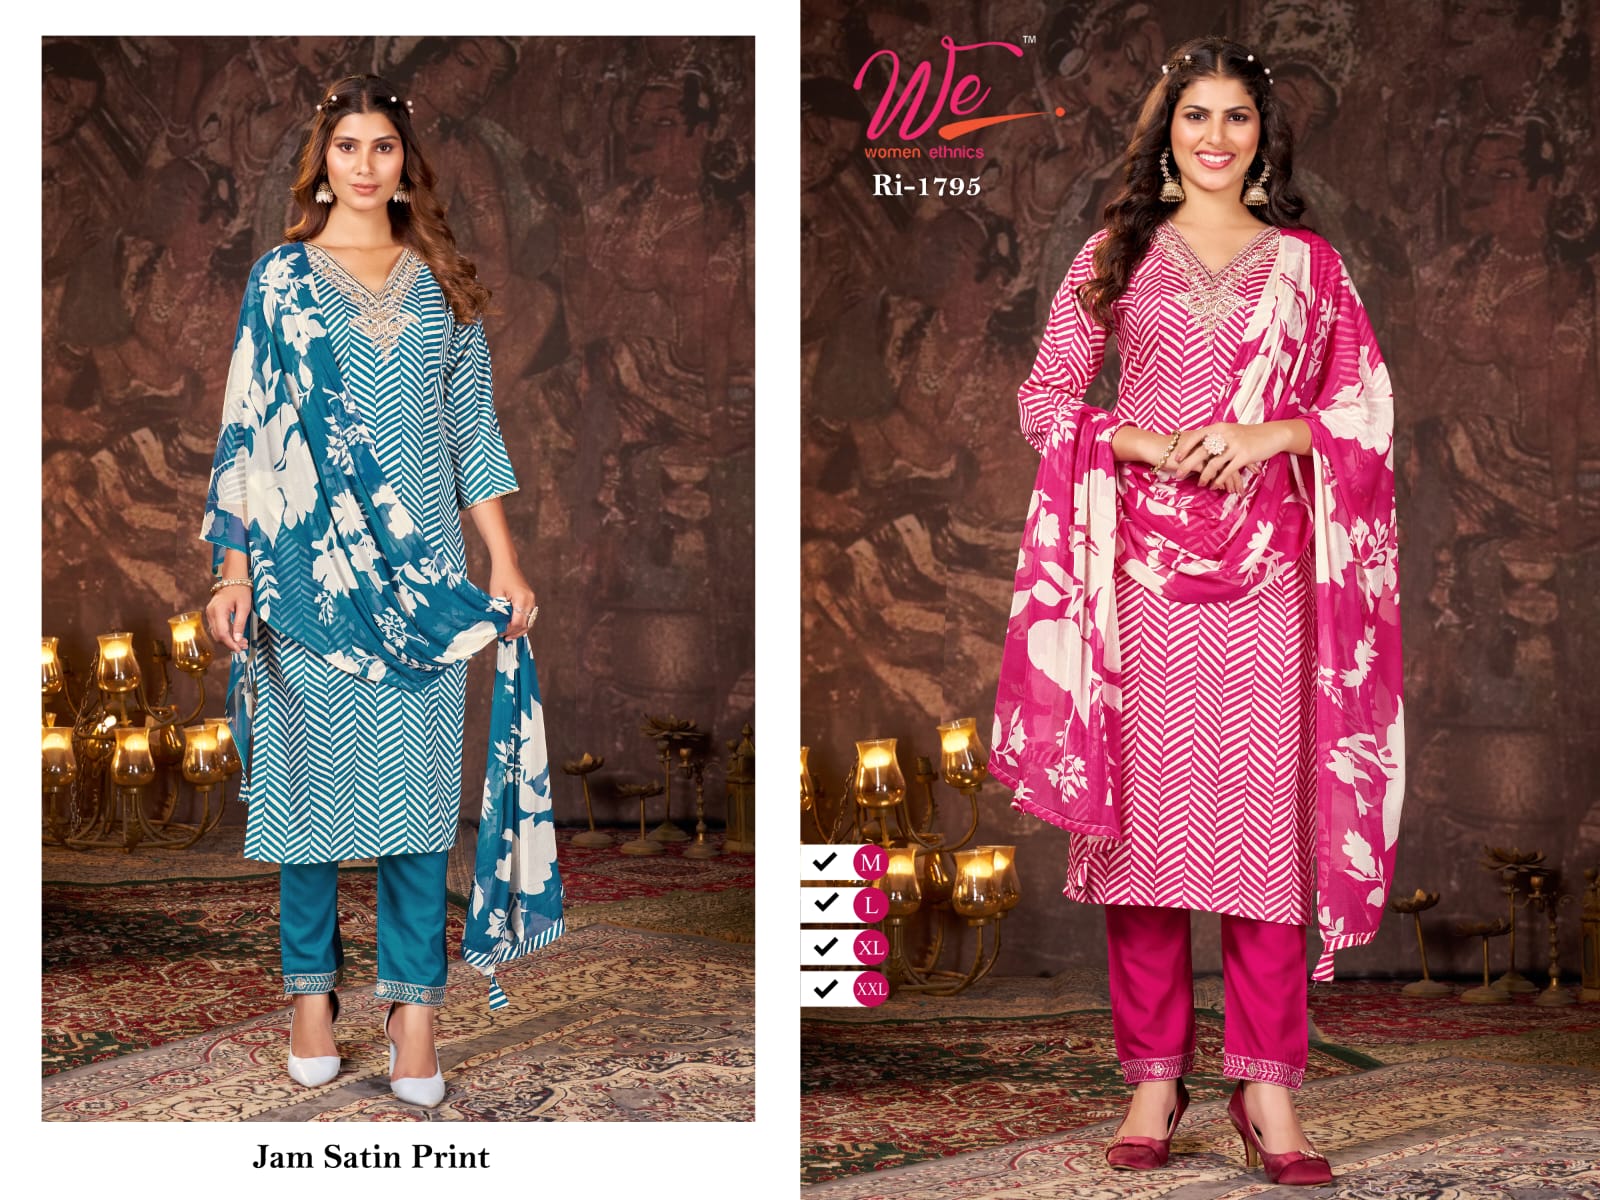 Ri 1795-1801 Women Ethnics Jam Satin Readymade Pant Style Suits Supplier